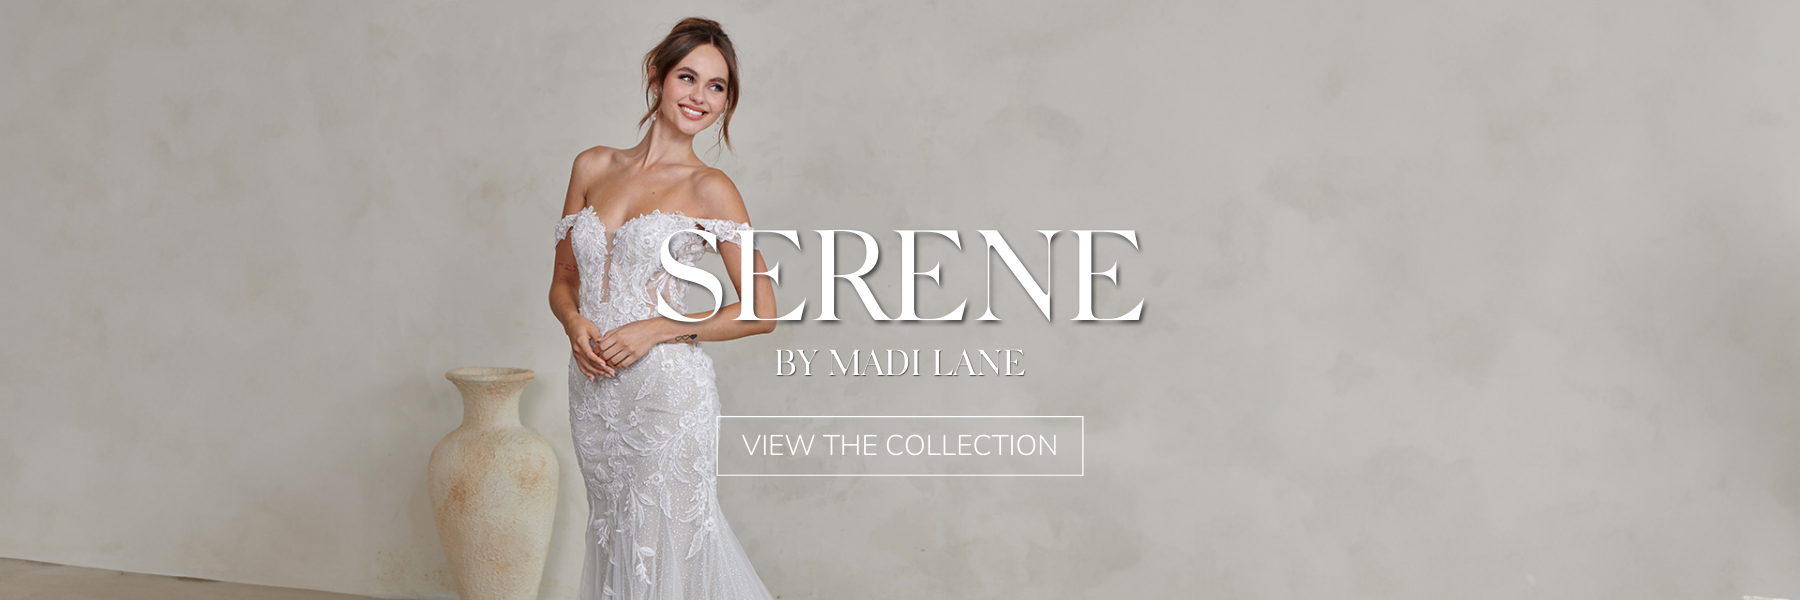 Serene by Madi Lane Bridal gown